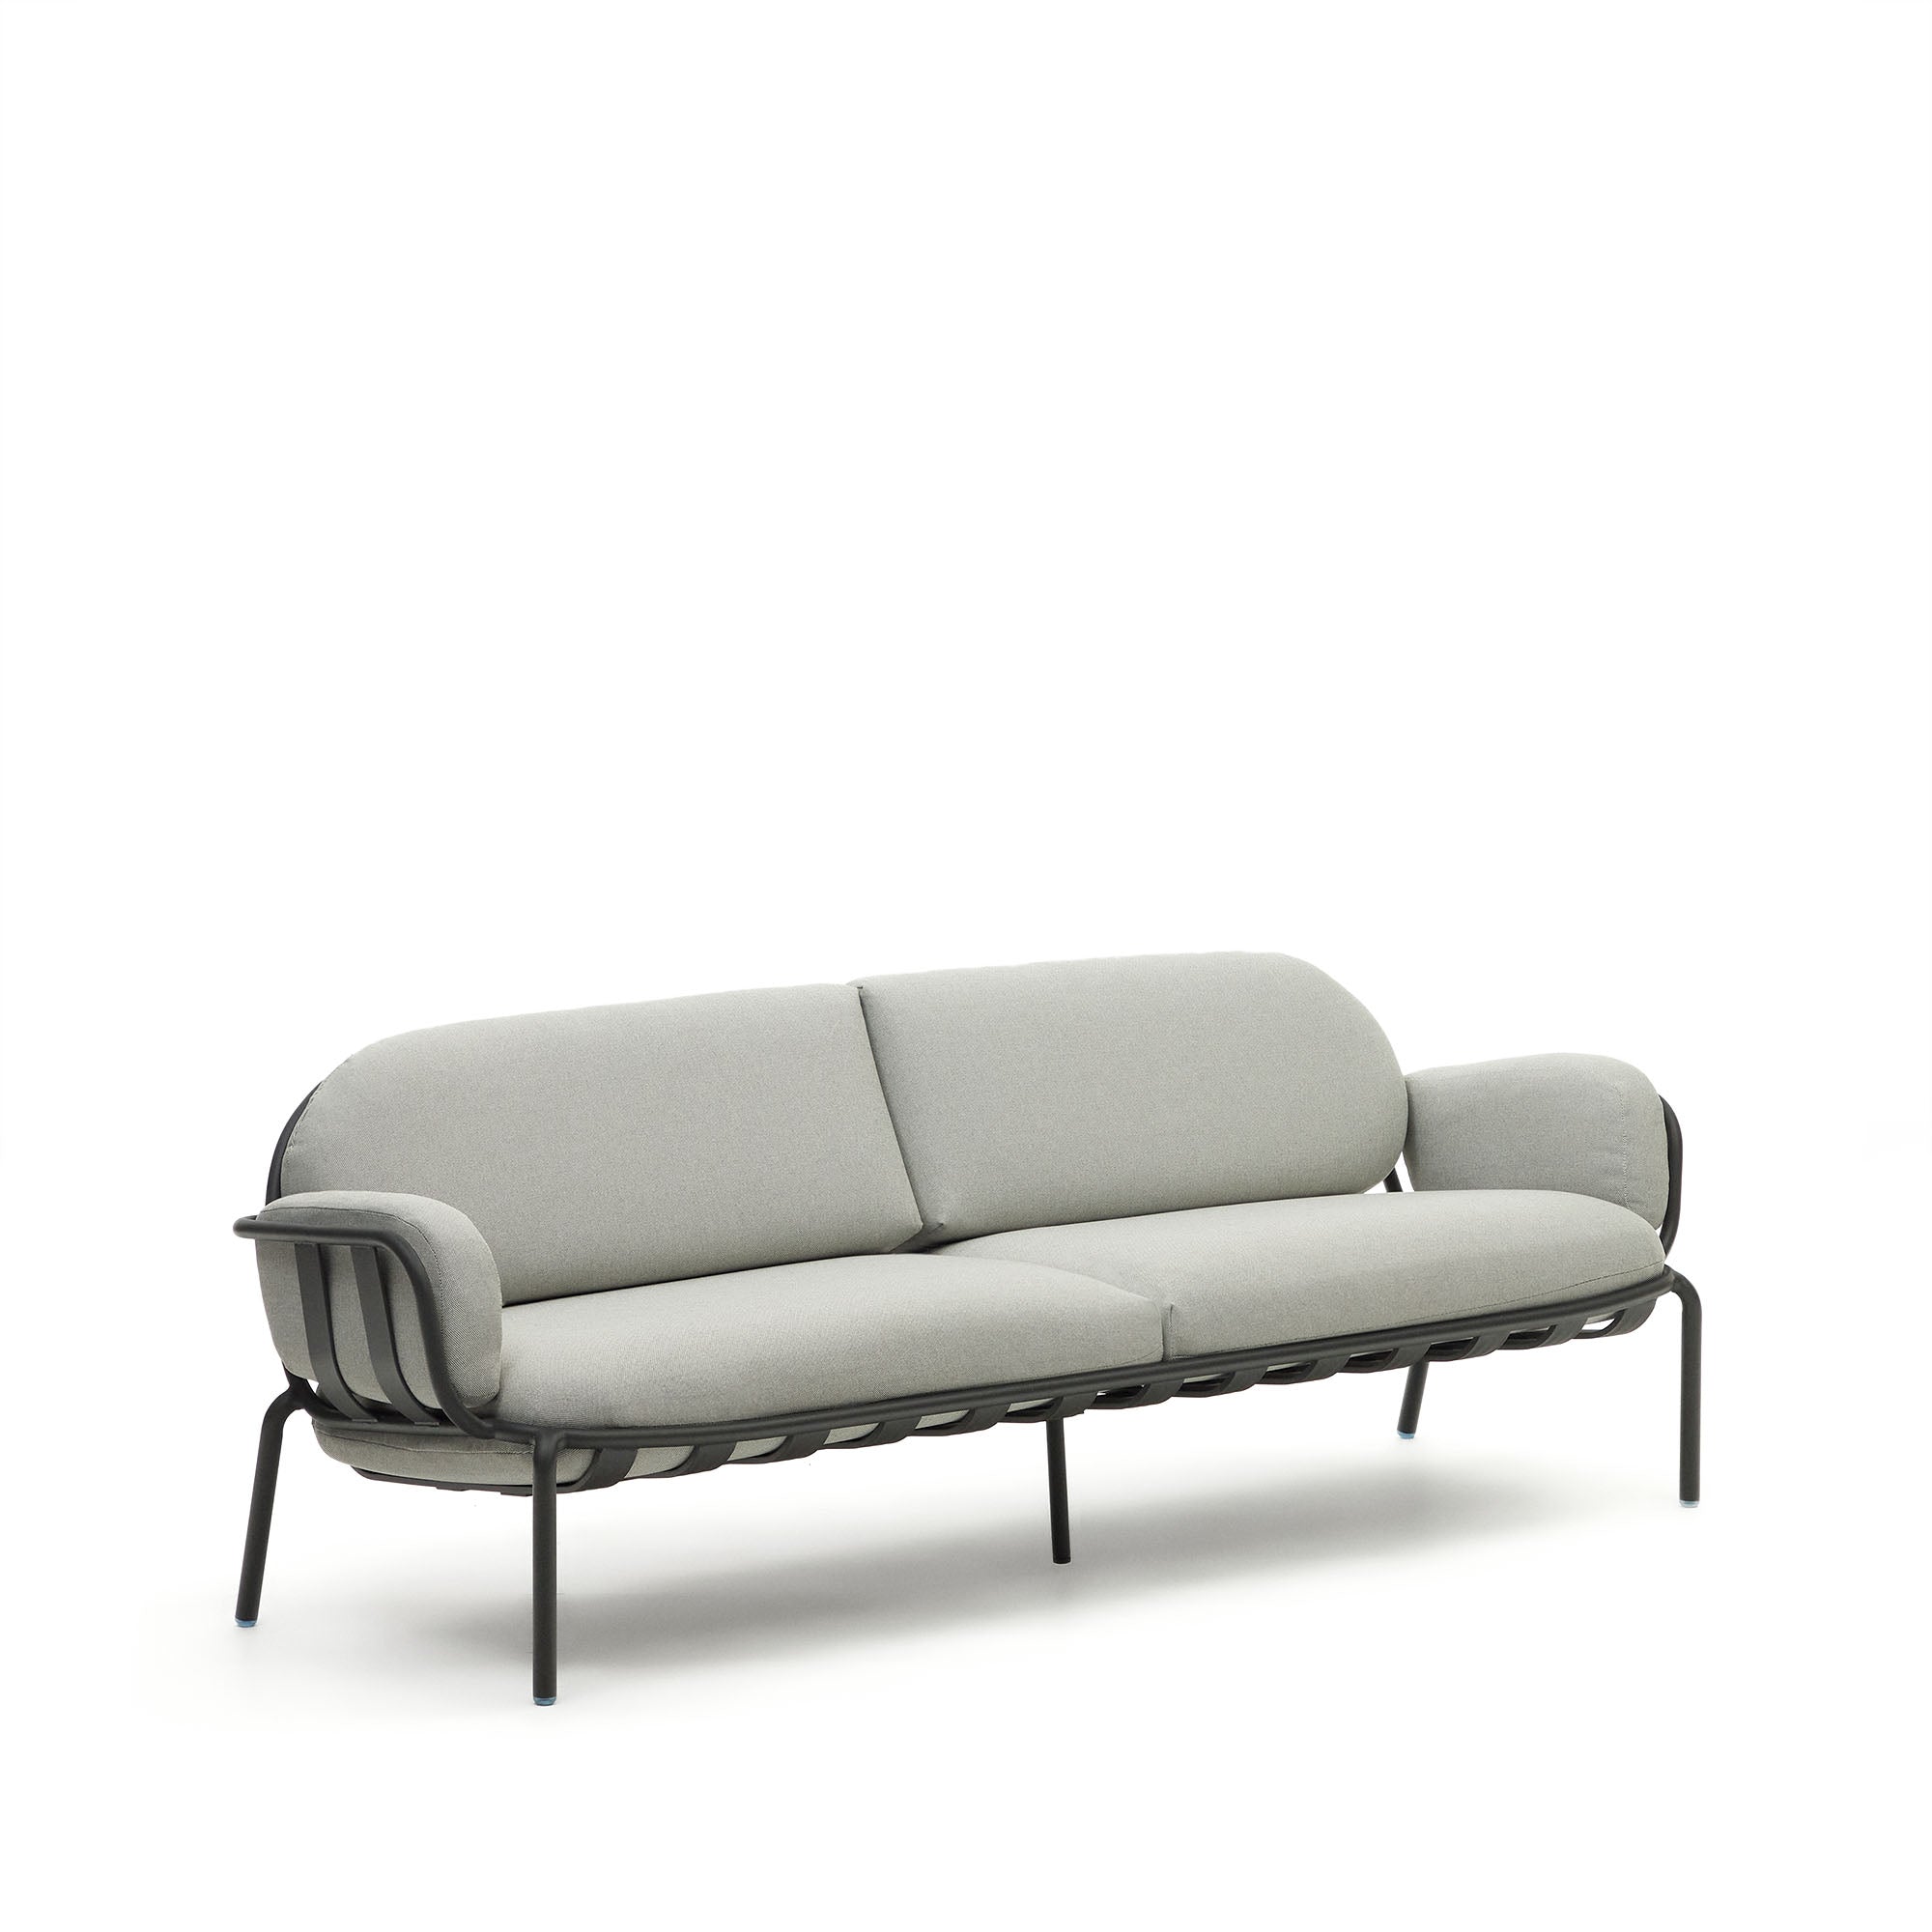 Joncols outdoor aluminium 3 seater sofa with powder coated grey finish, 225 cm